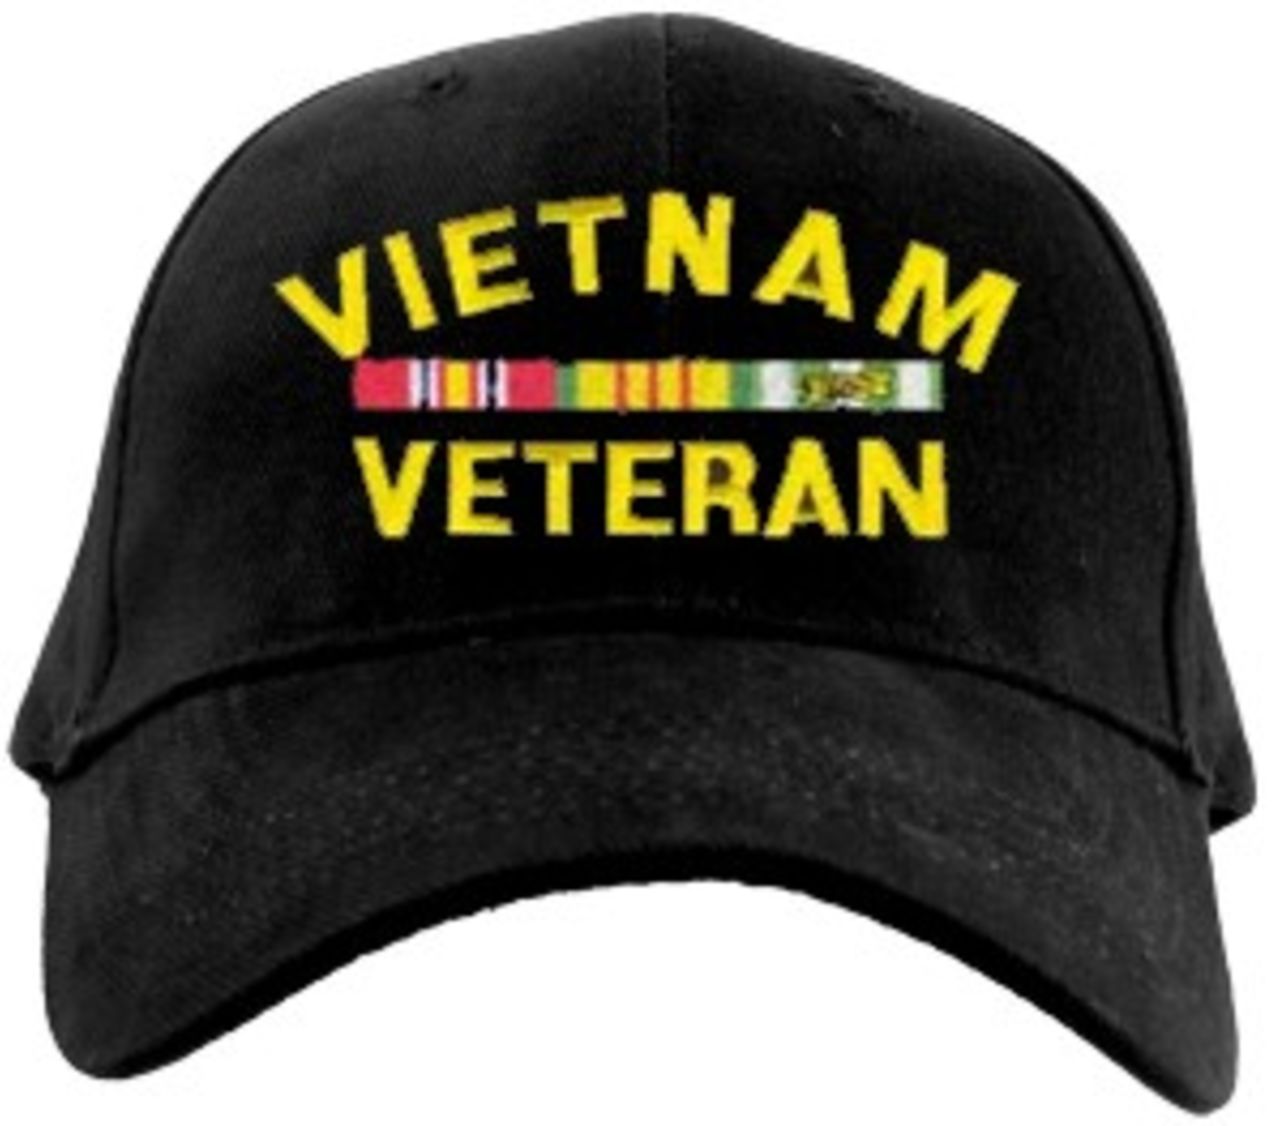 We Love to Serve Veterans